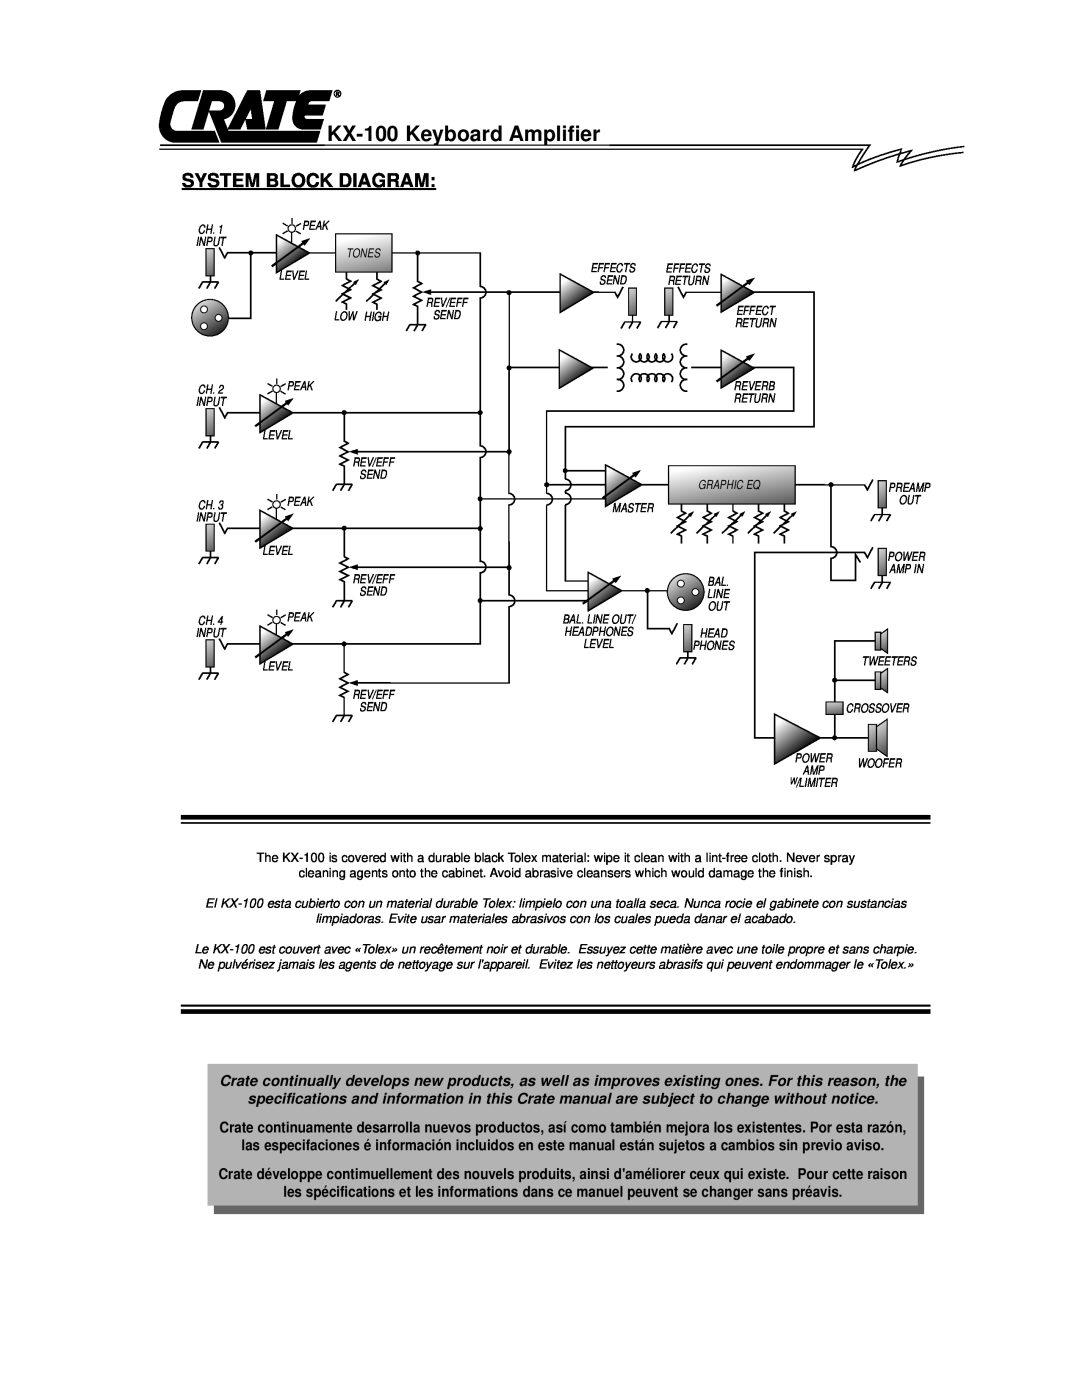 Crate Amplifiers KX-80 owner manual System Block Diagram, KX-100Keyboard Amplifier 